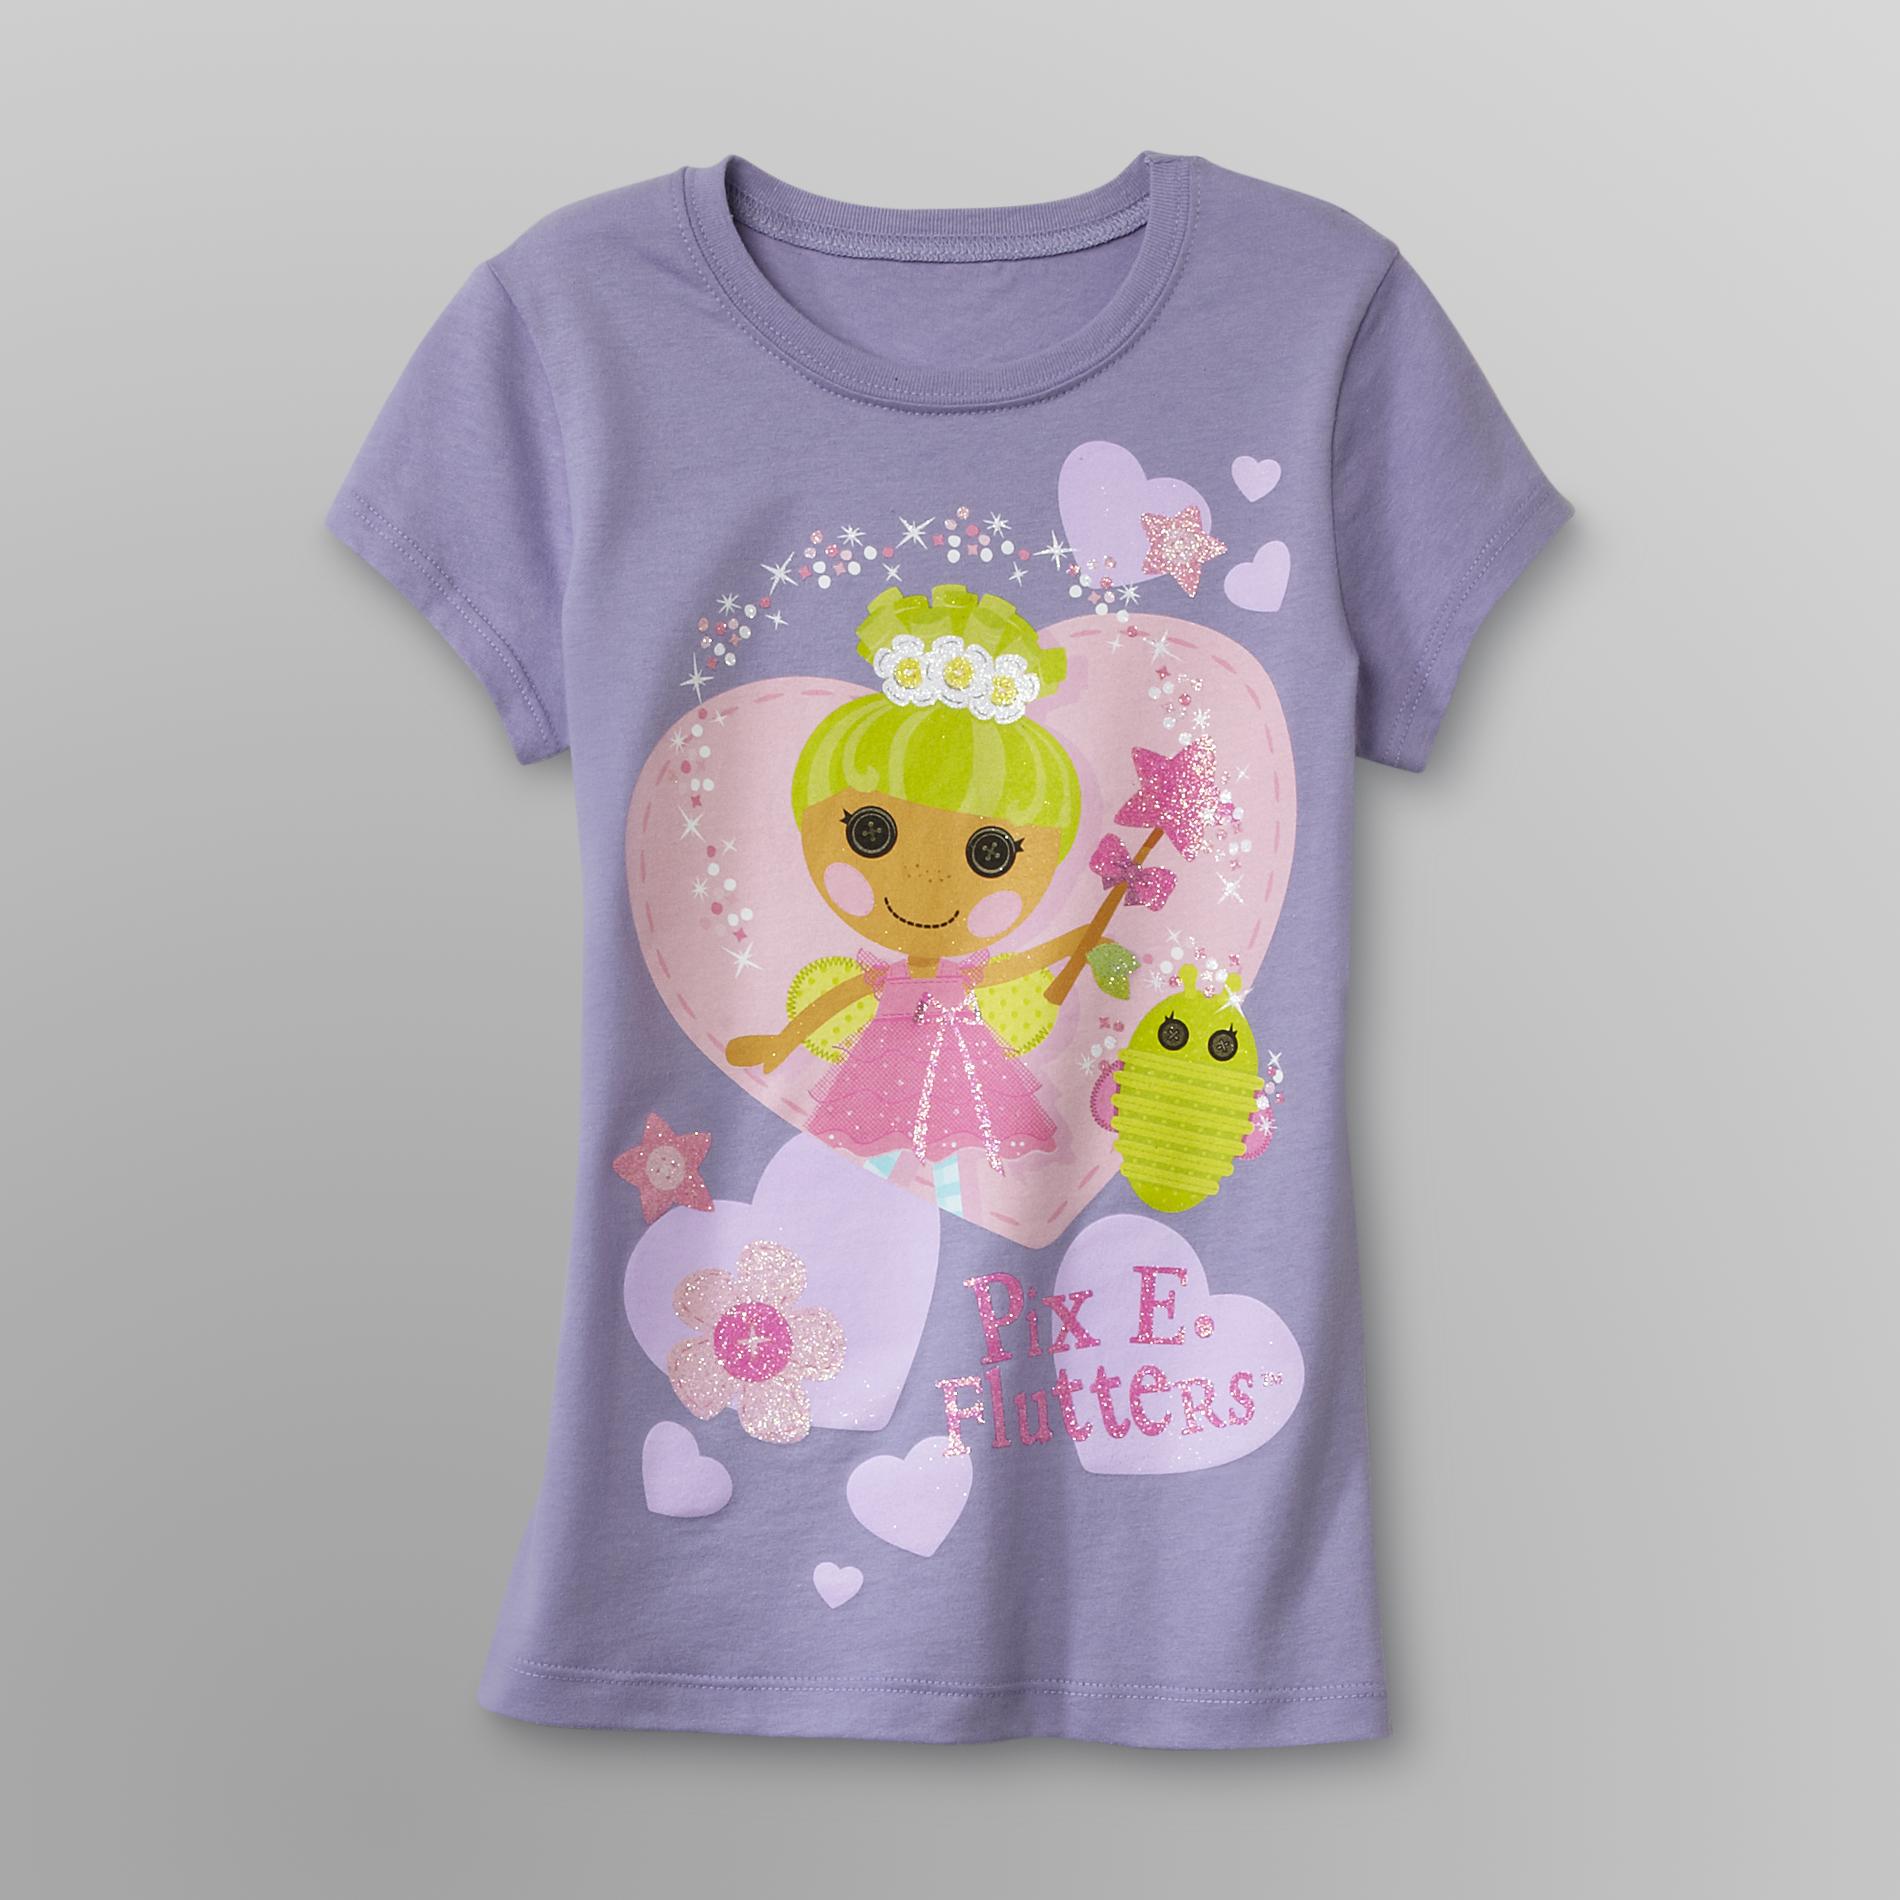 MGA Entertainment Lalaloopsy Girl's Glitter T-Shirt - Pix E. Flutters